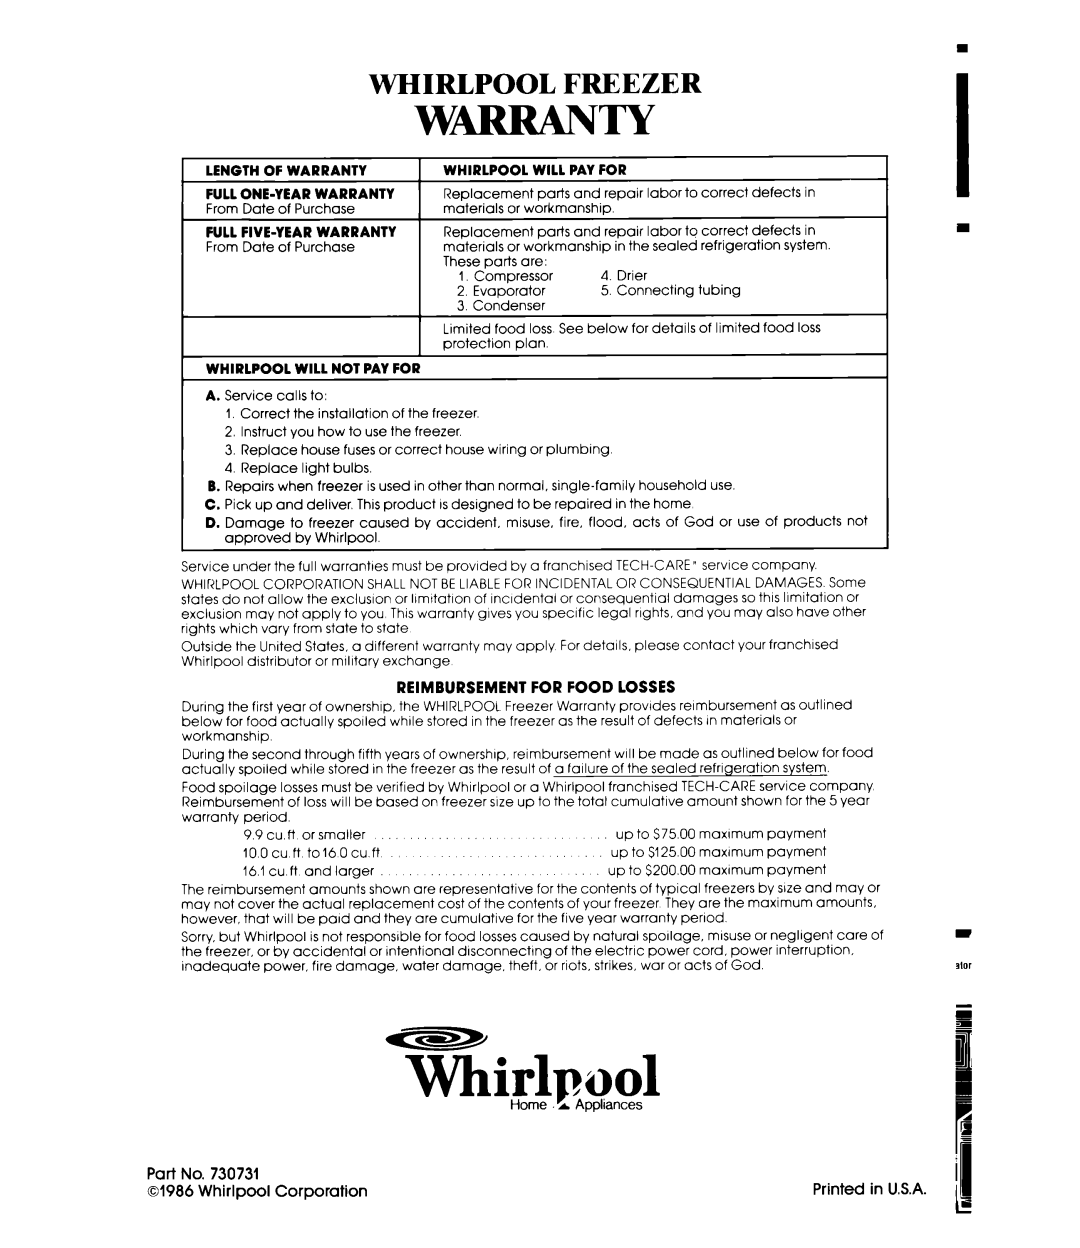 Whirlpool EH120F manual Whirlpool Freezer, Reimbursement For Food Losses, Whirlpool Corporation 